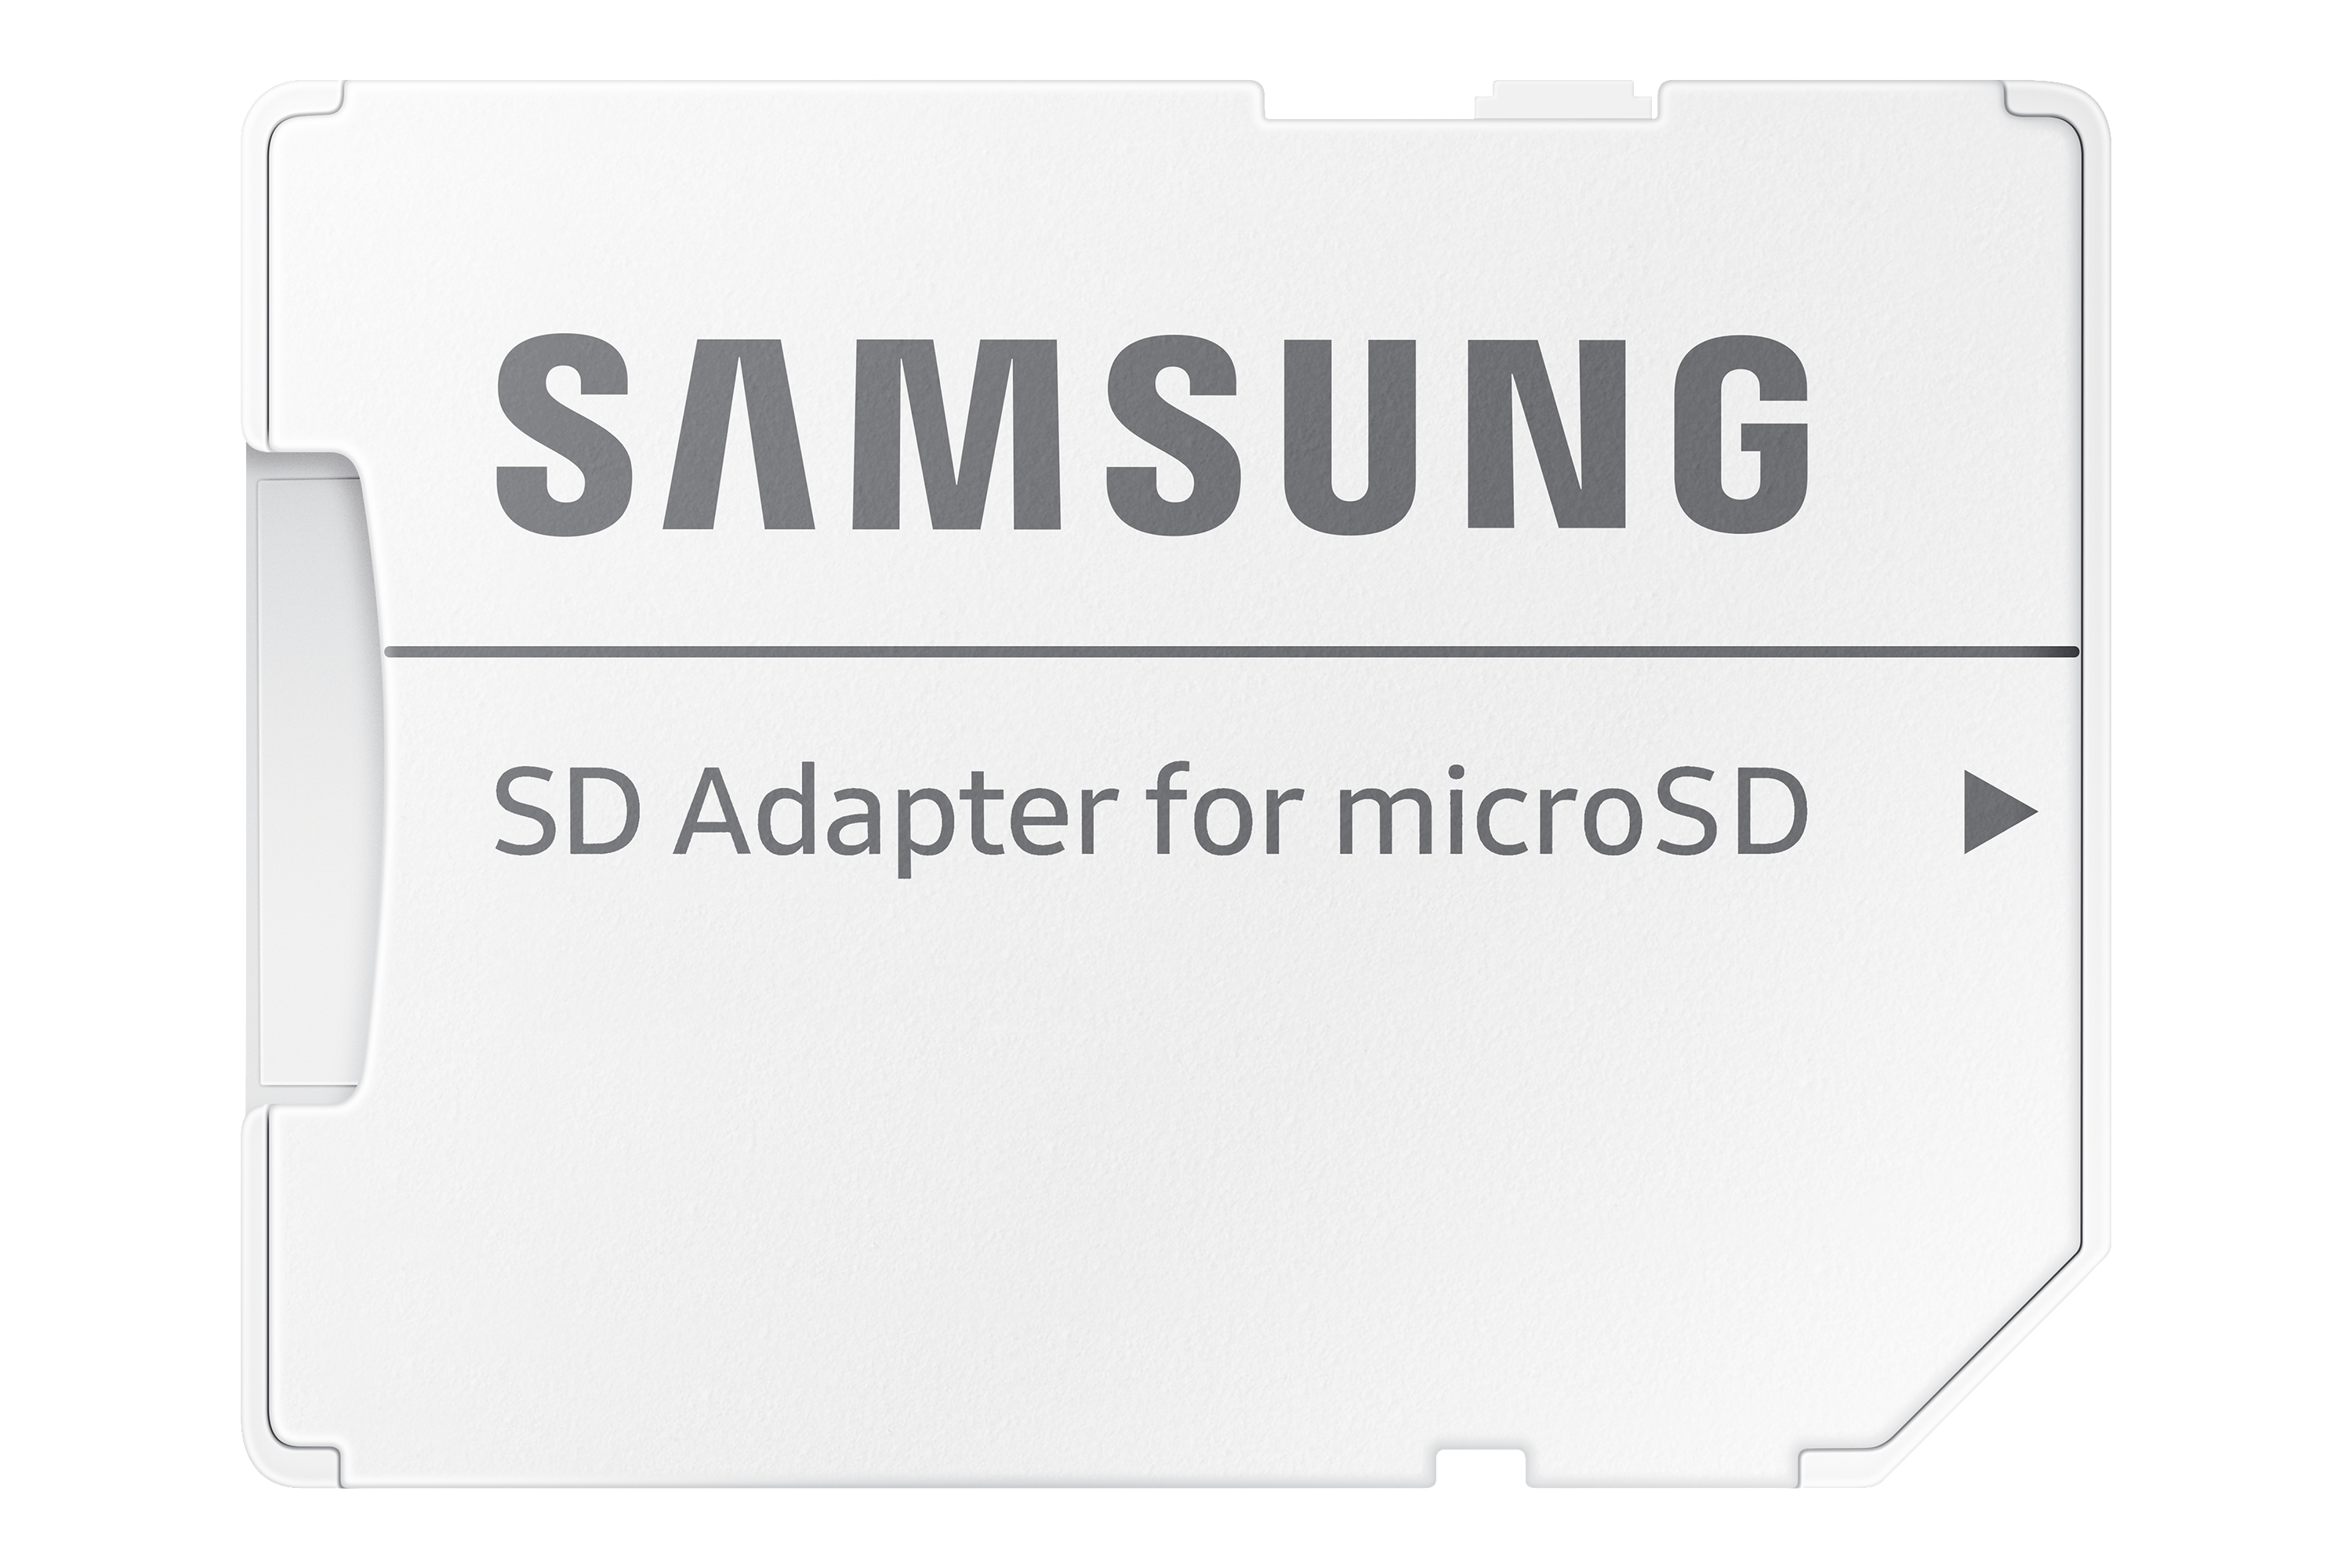 200 Ultimate, GB, Speicherkarte, 512 SAMSUNG Micro-SD PRO MB/s